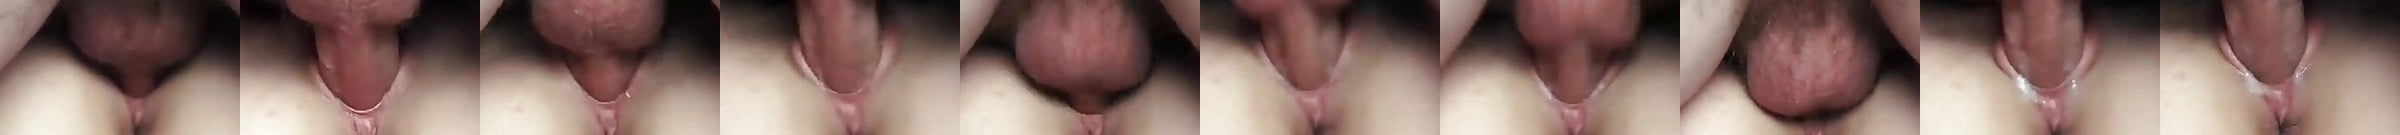 Phim Sex Porn Videos Xhamster